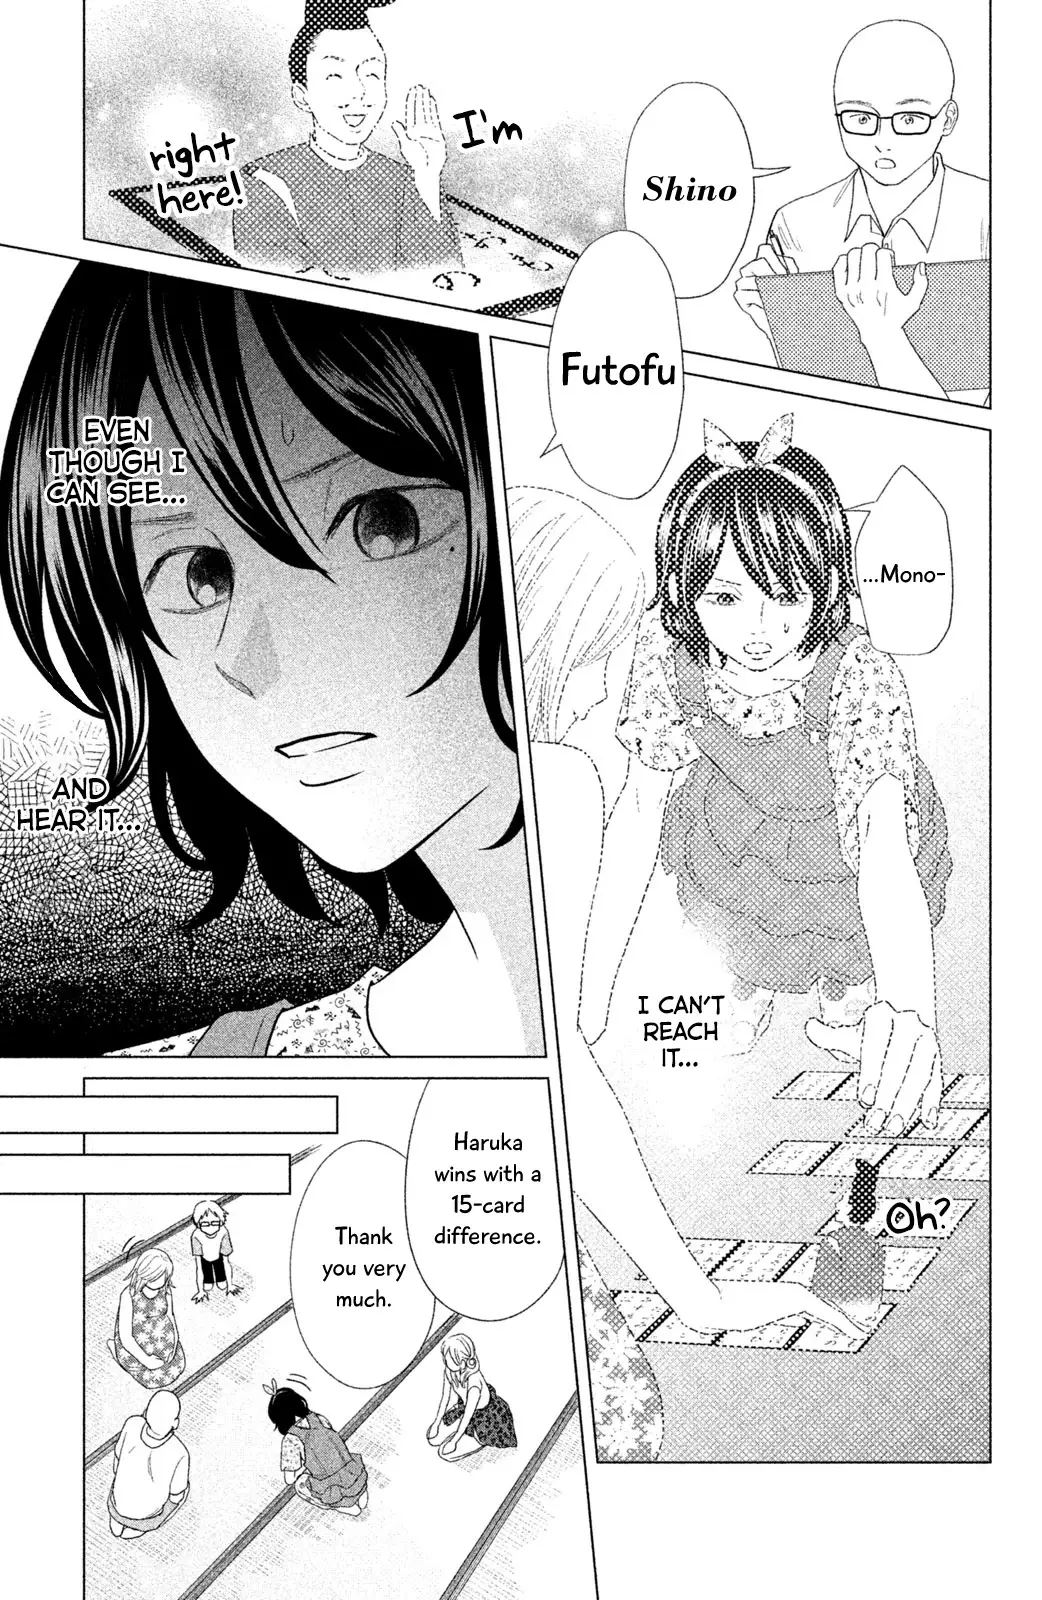 Chihayafuru: Middle School Arc - 12 page 14